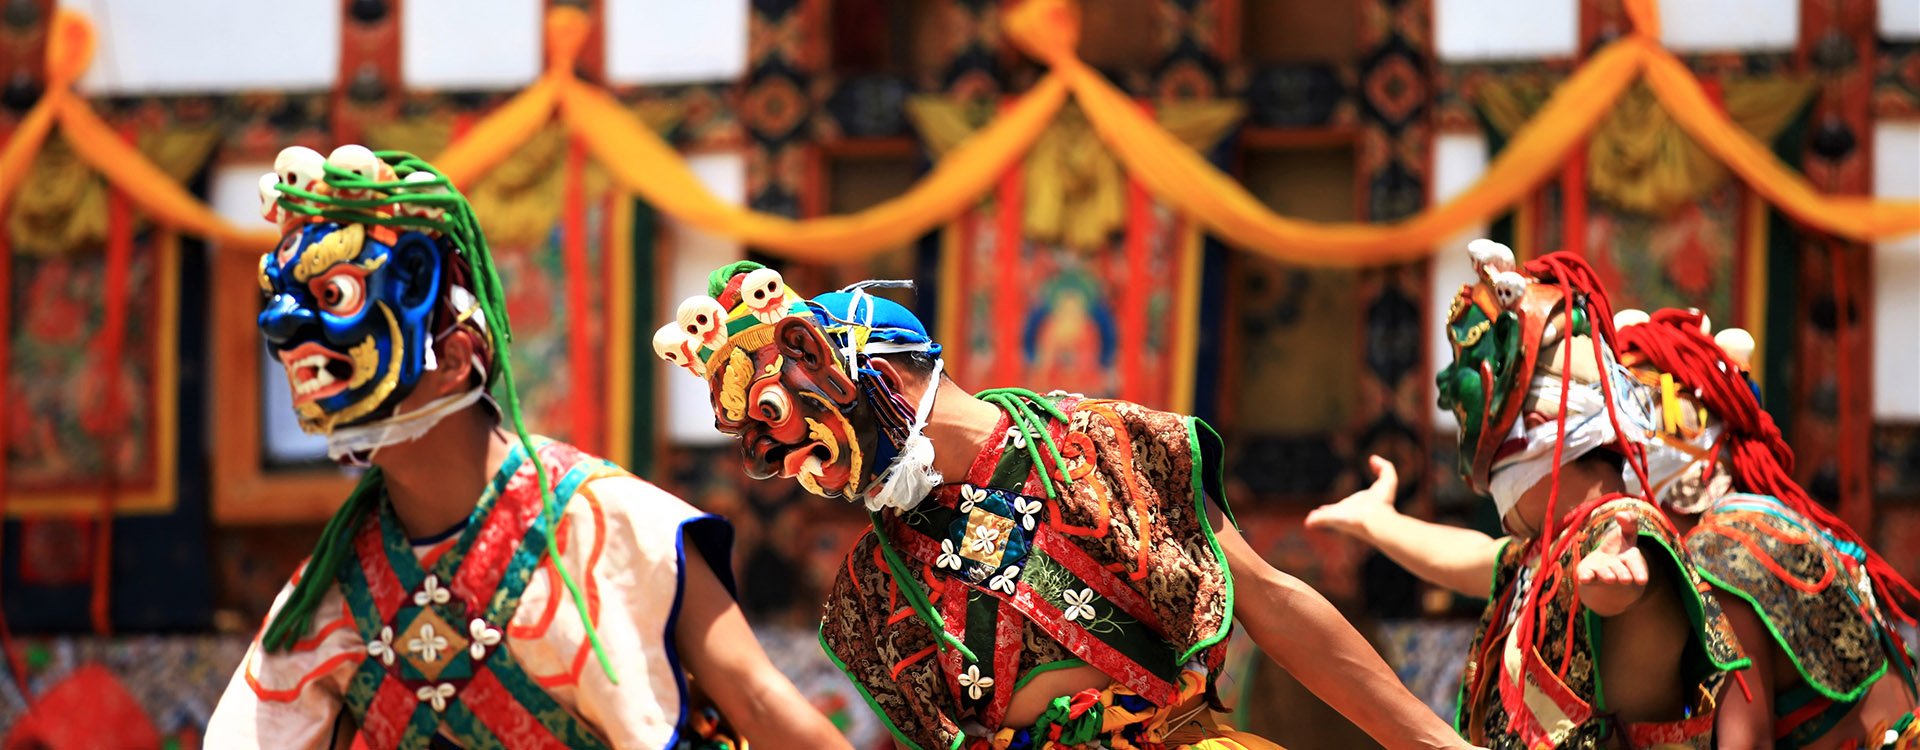 Bhutan dance(tibet dance)